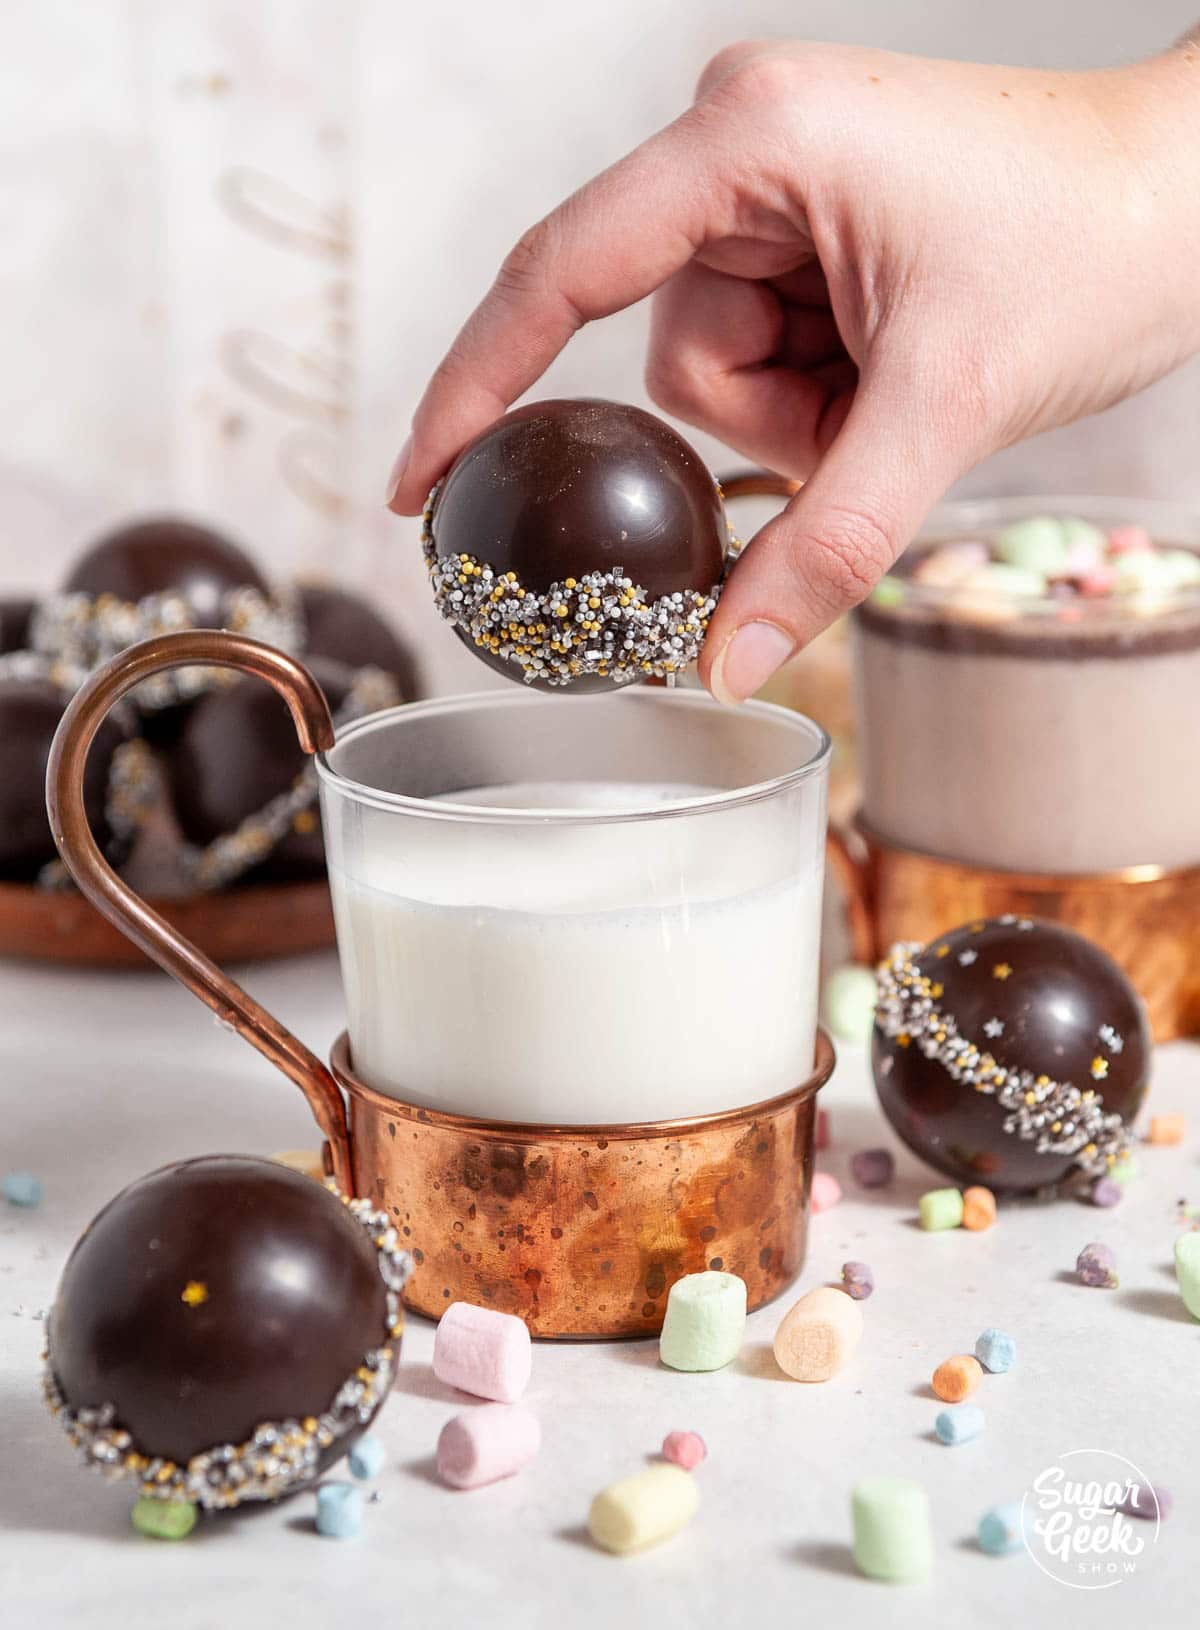 Hot chocolate cocoa bomb dropped into hot milk in copper mug